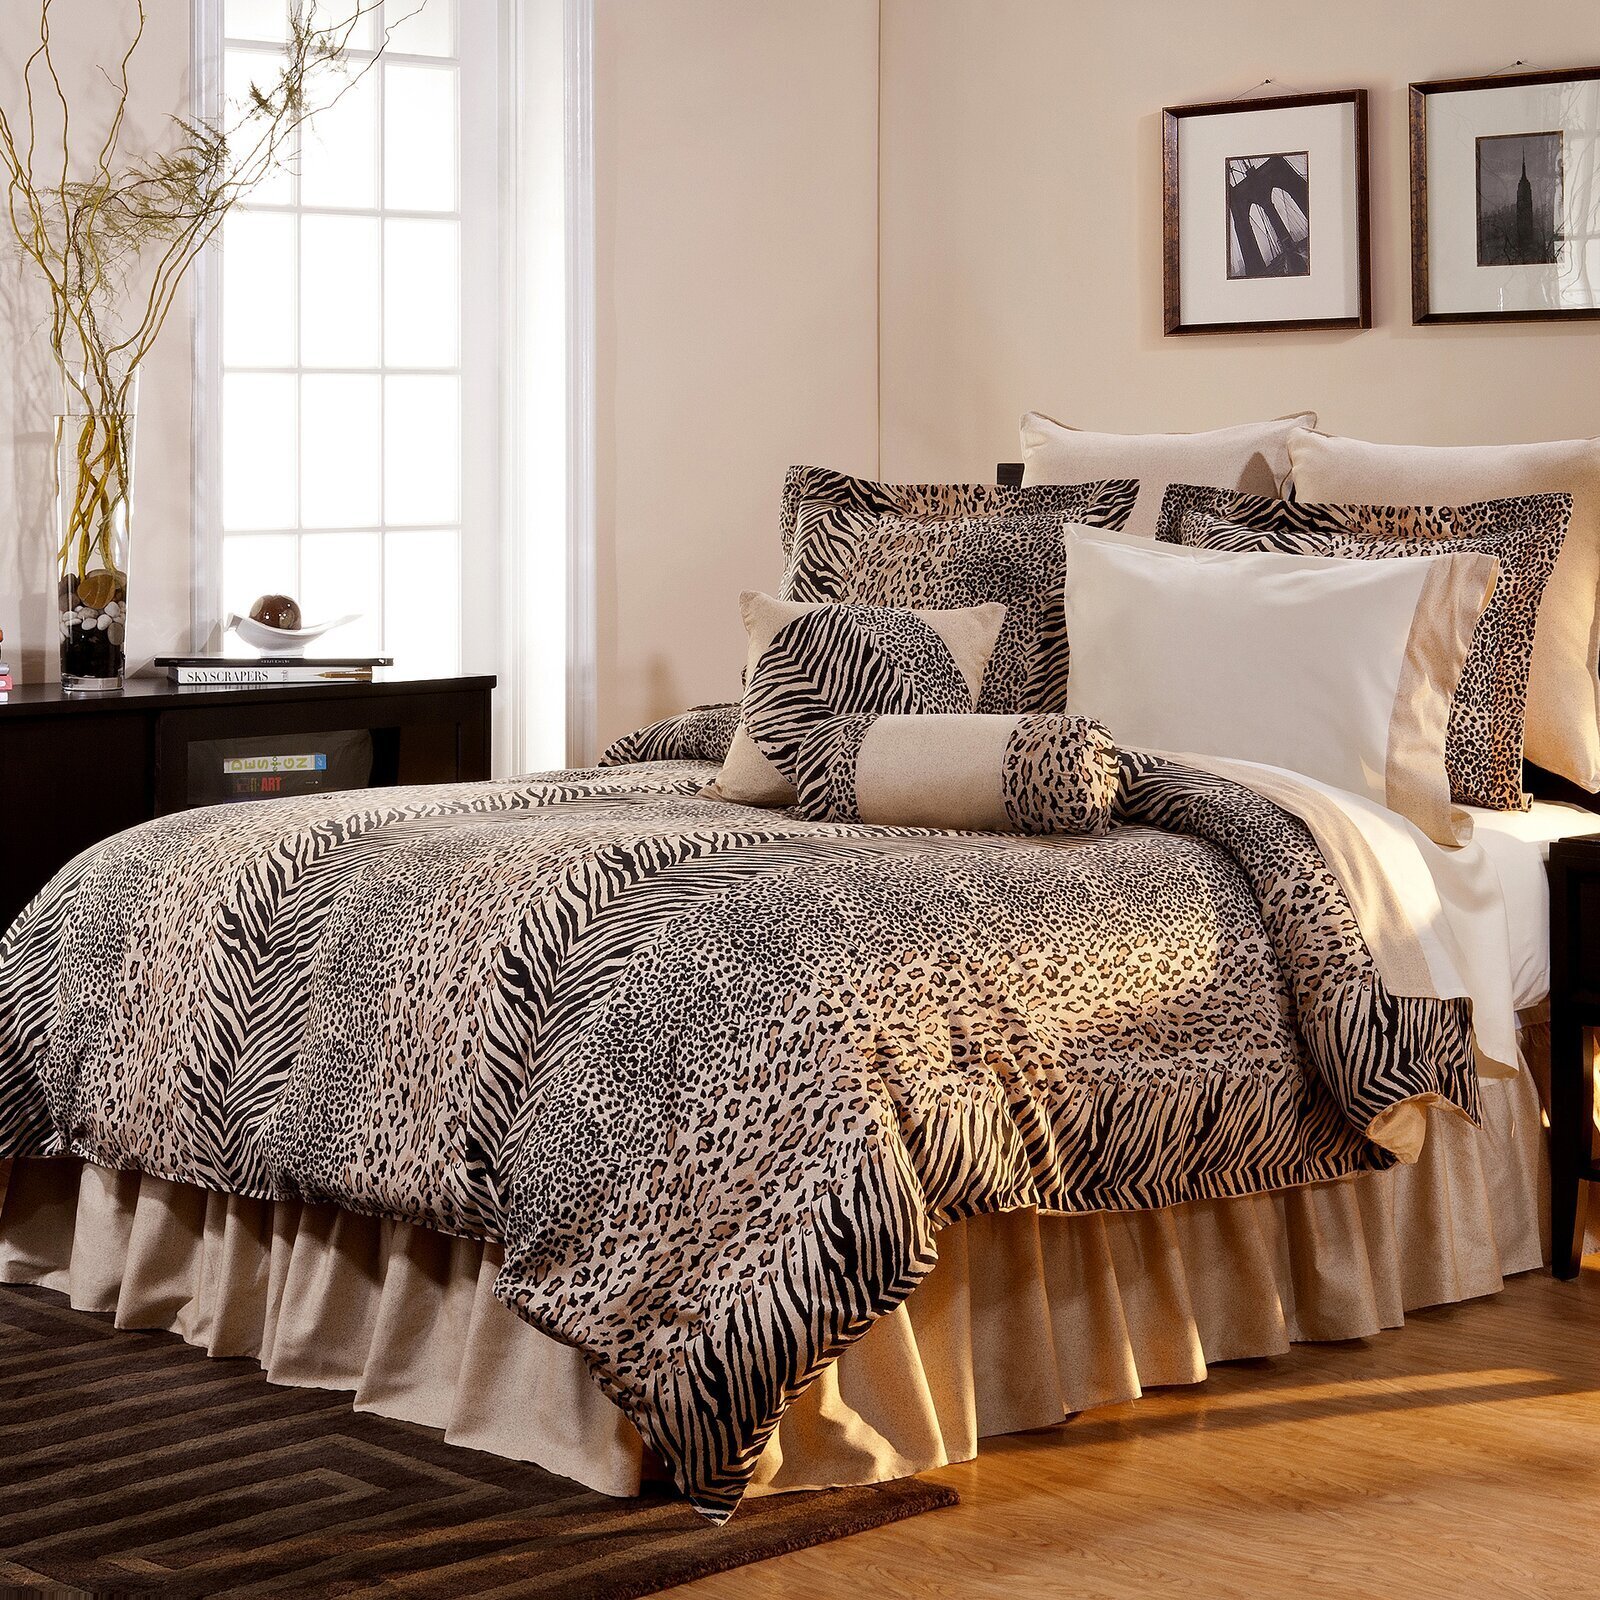 Full Queen King Beige Brown Cheetah Safari Faux Fur 4 pc Comforter Set Bedding 